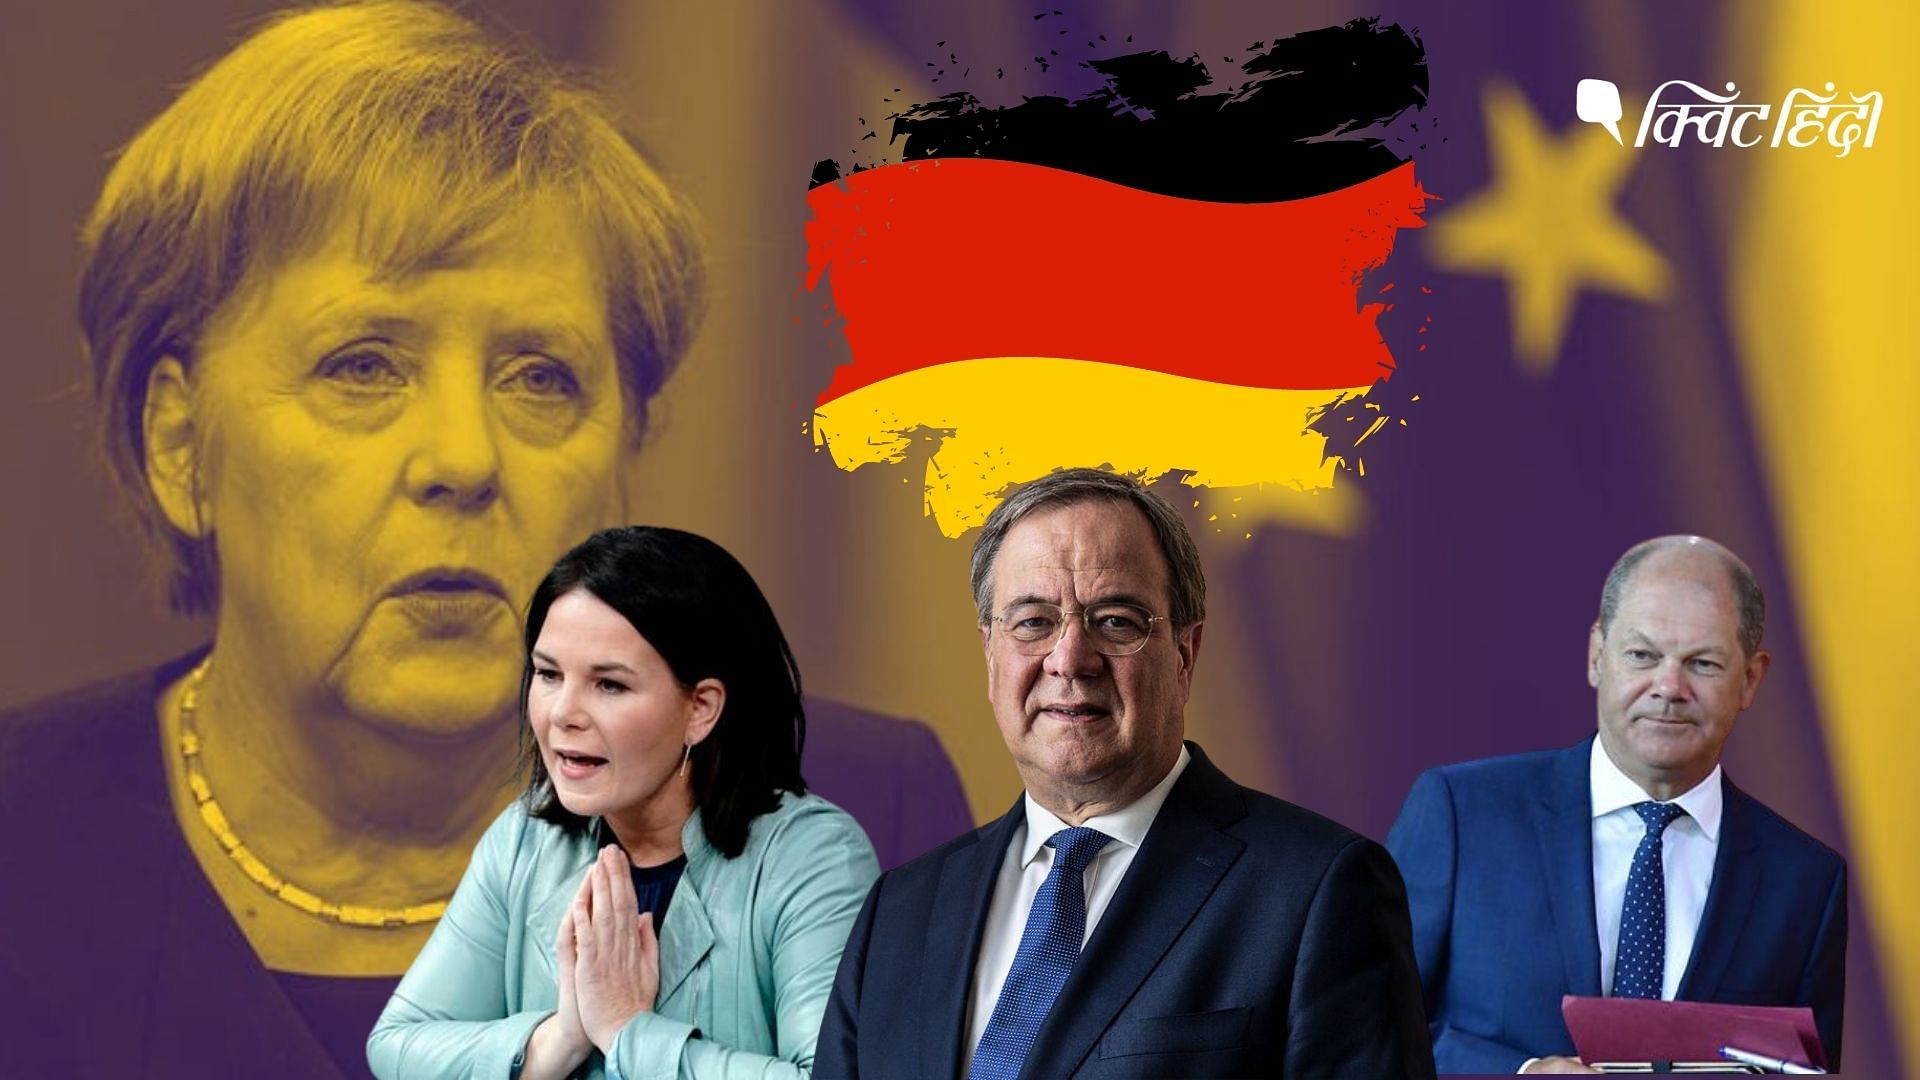 <div class="paragraphs"><p>German election: Angela Merkel के बाद  चांसलर कौन</p></div>